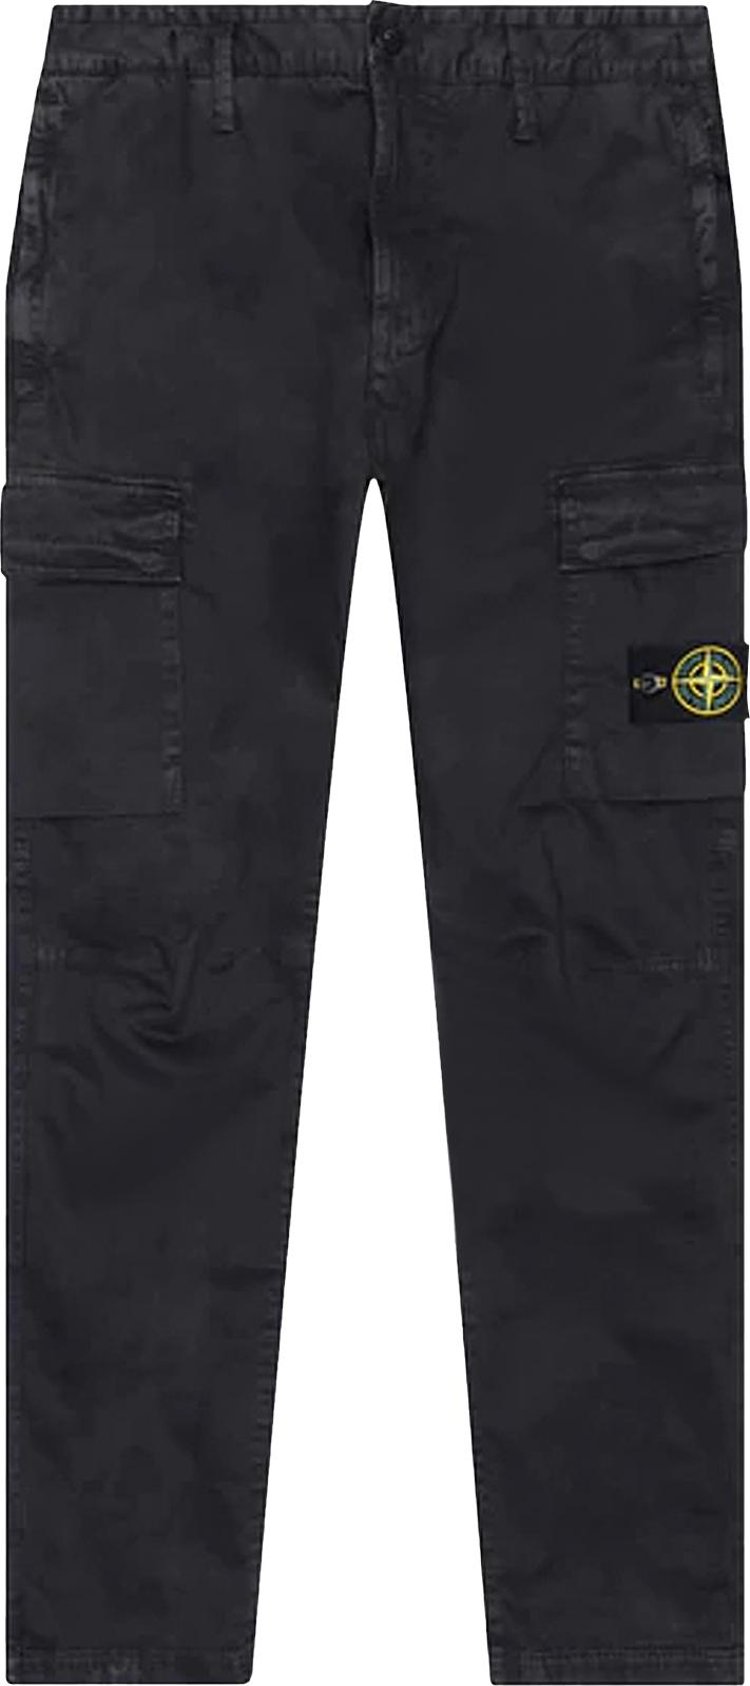 Buy Stone Island Cargo Pants 'Charcoal' - 761530404 V0165 | GOAT